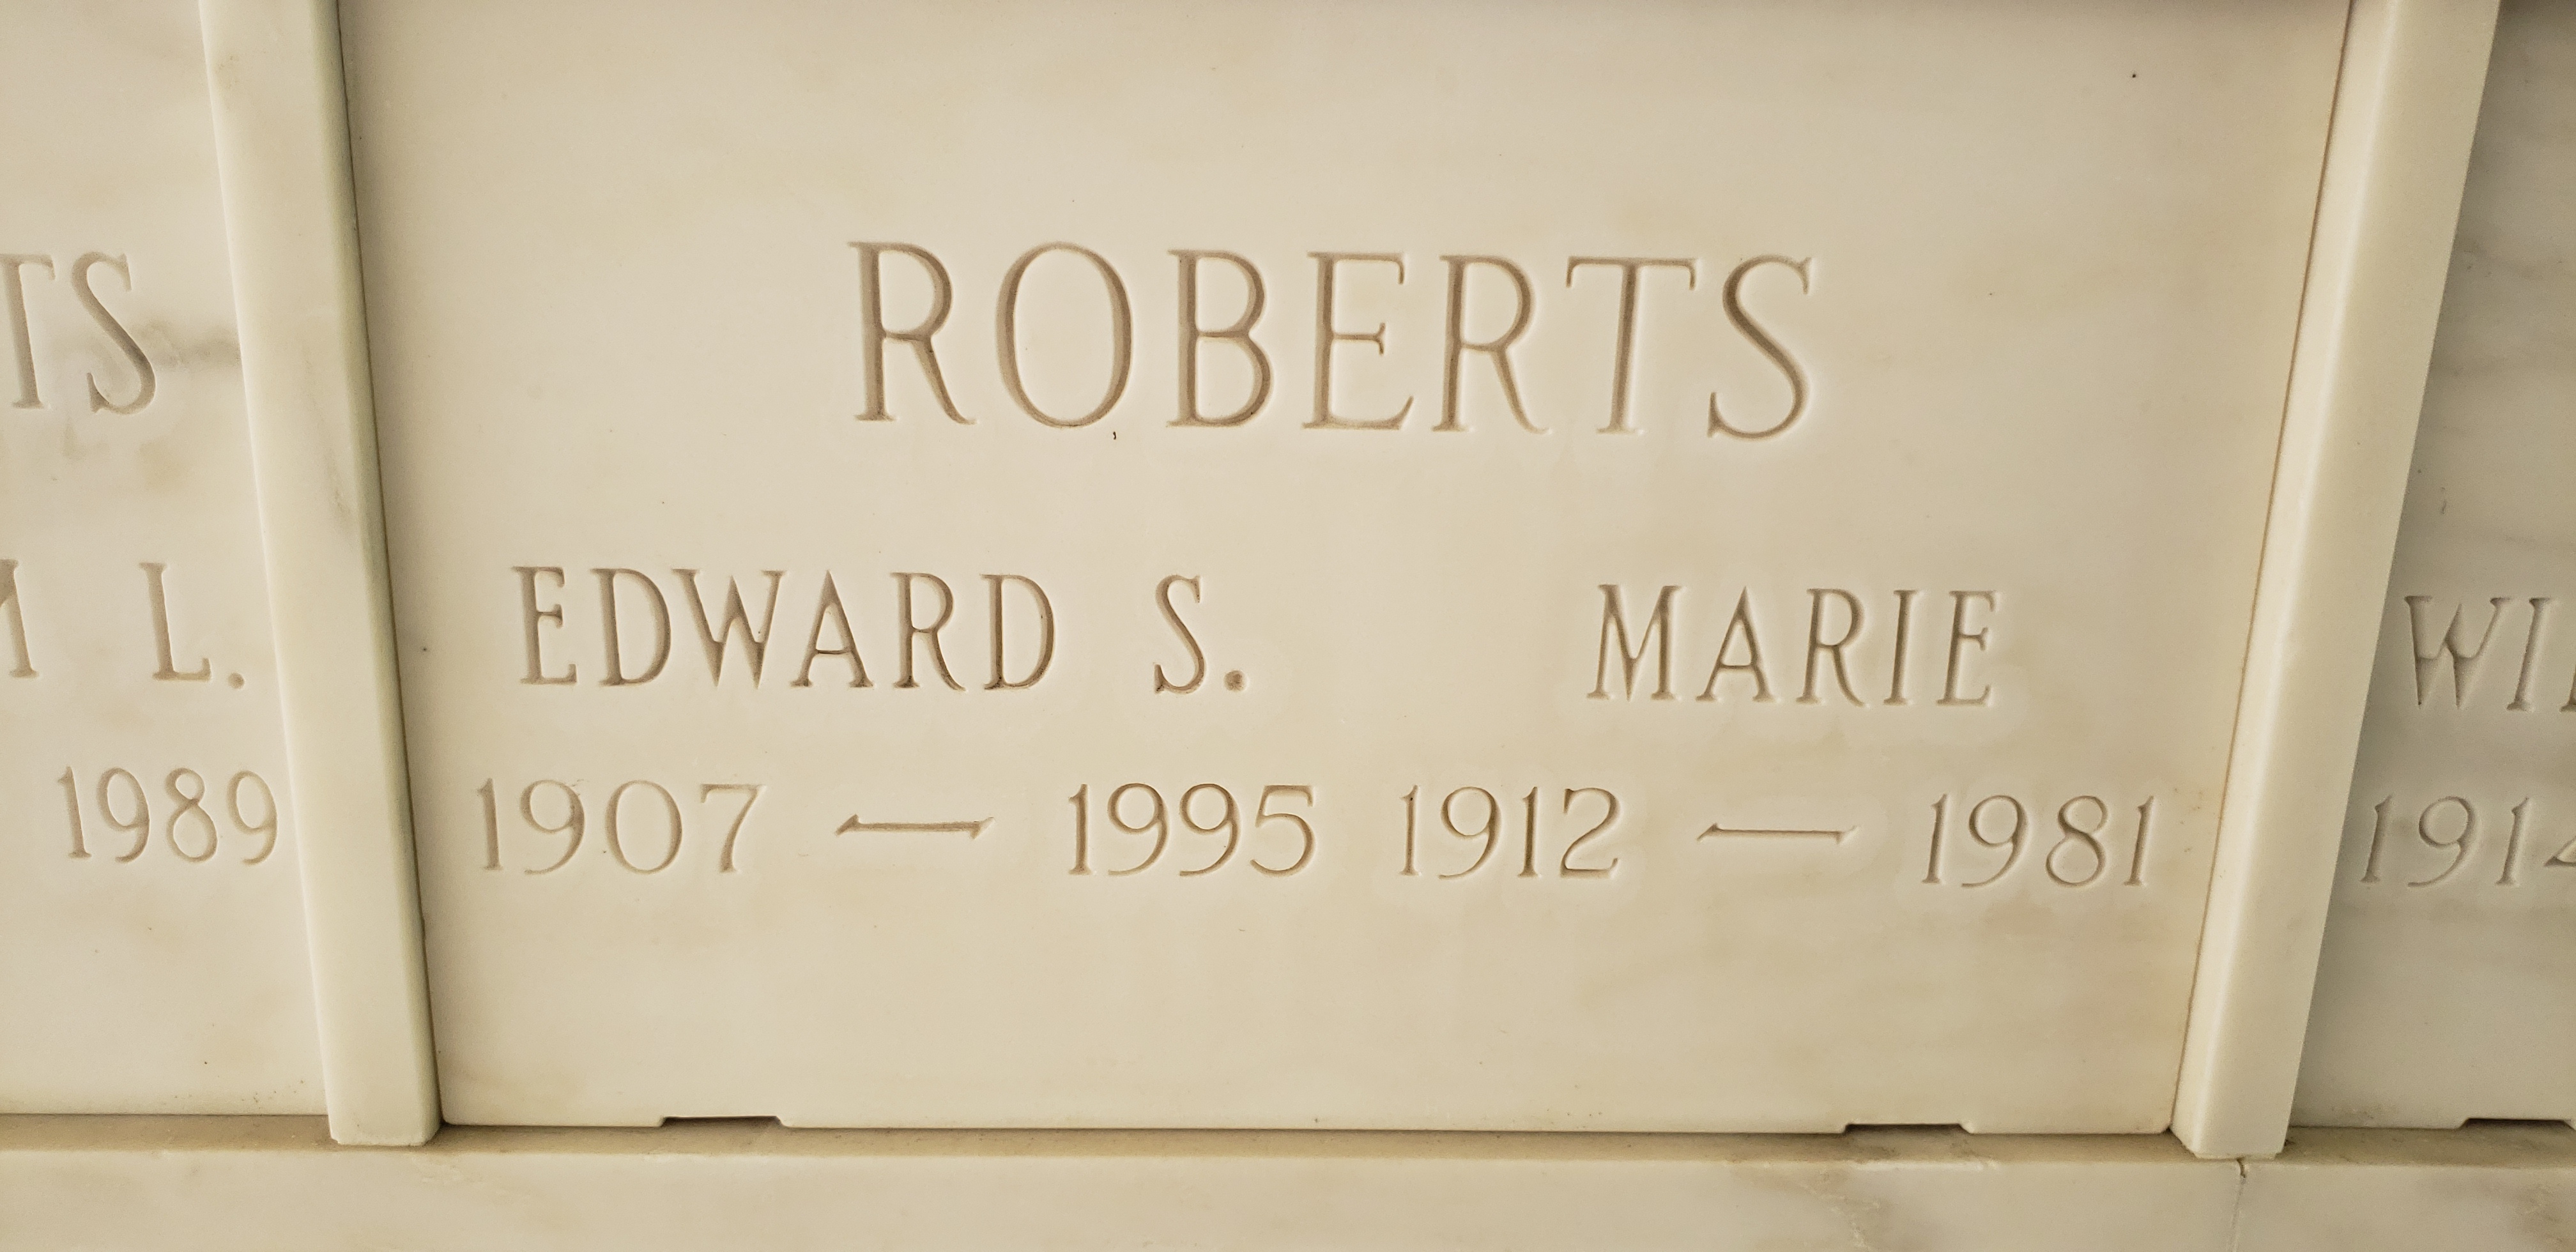 Edwards S Roberts